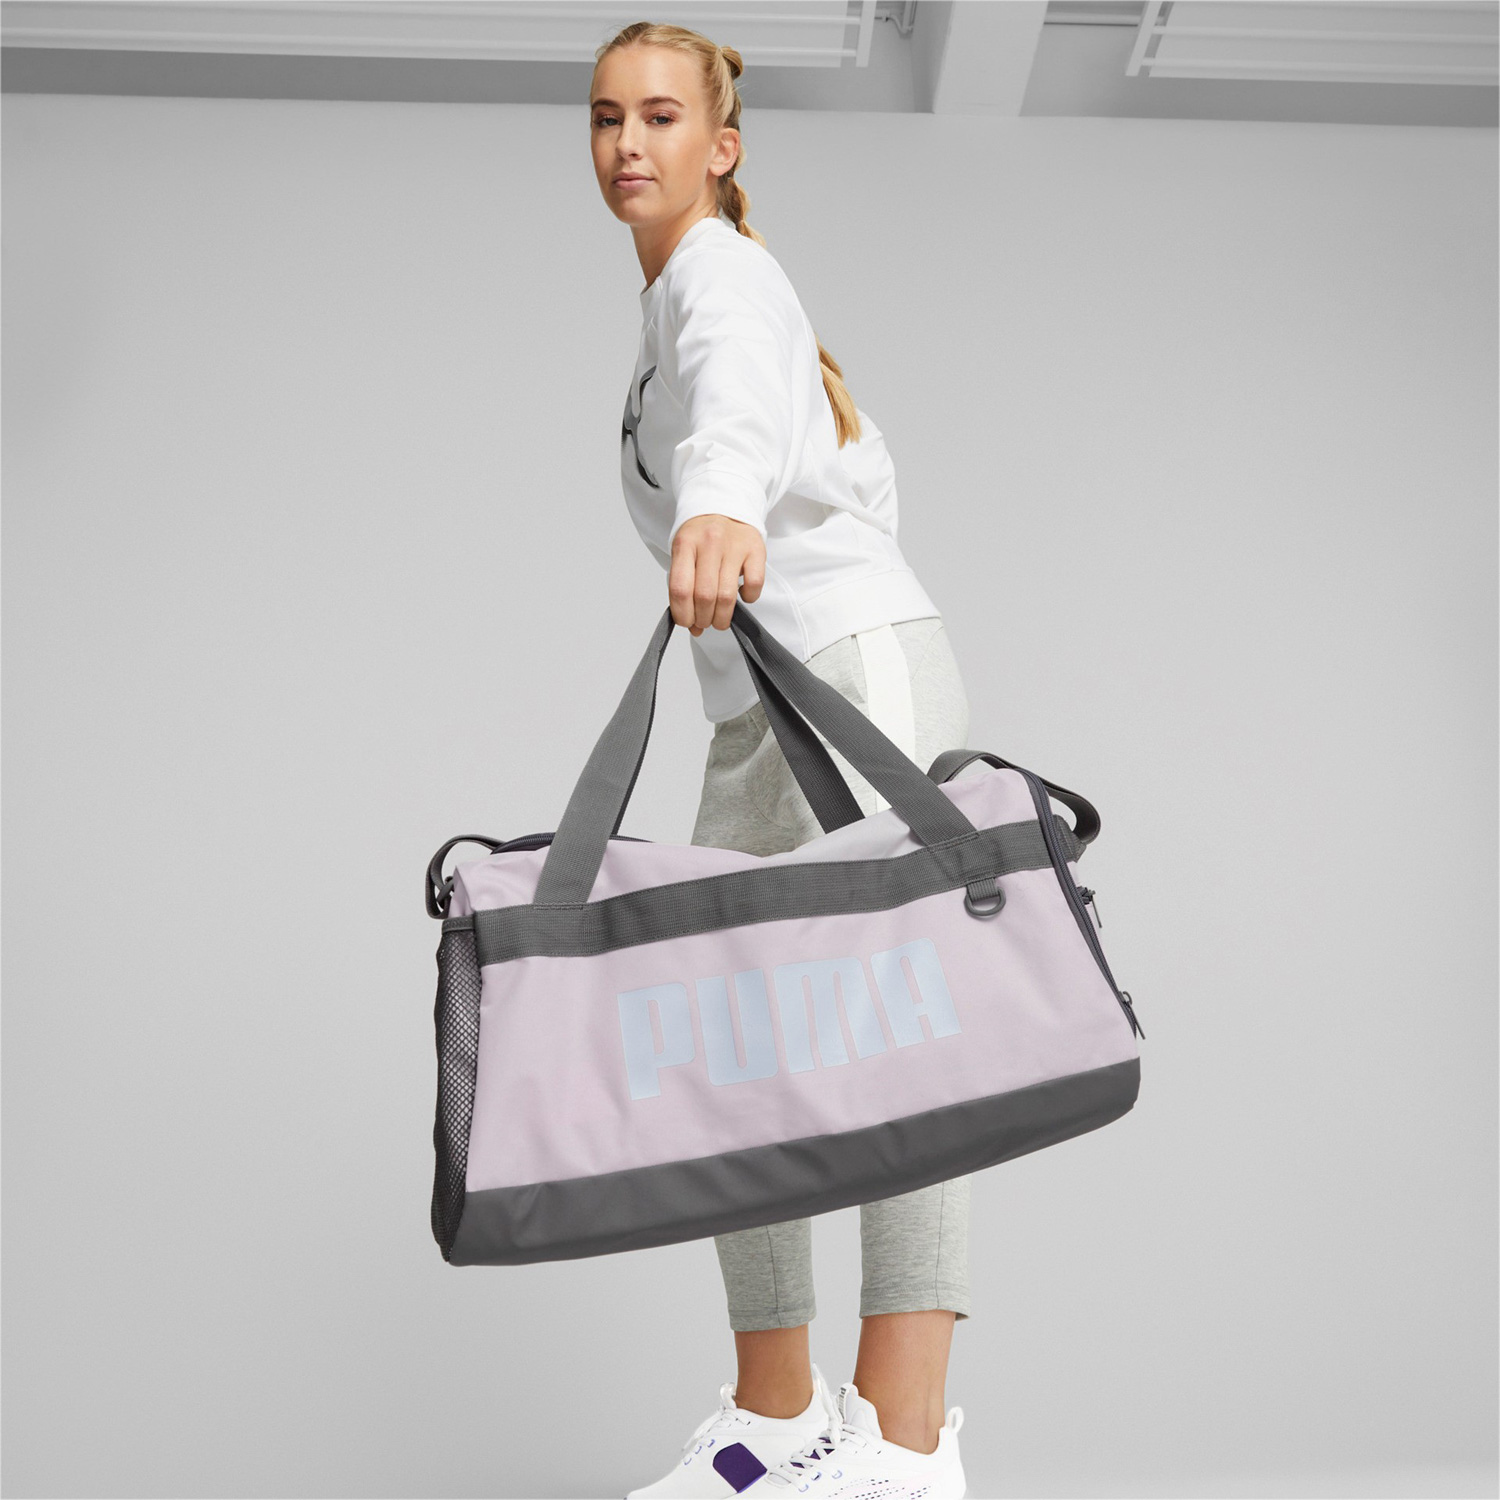 Puma Duffel Bag S Challenger Pearl Pink